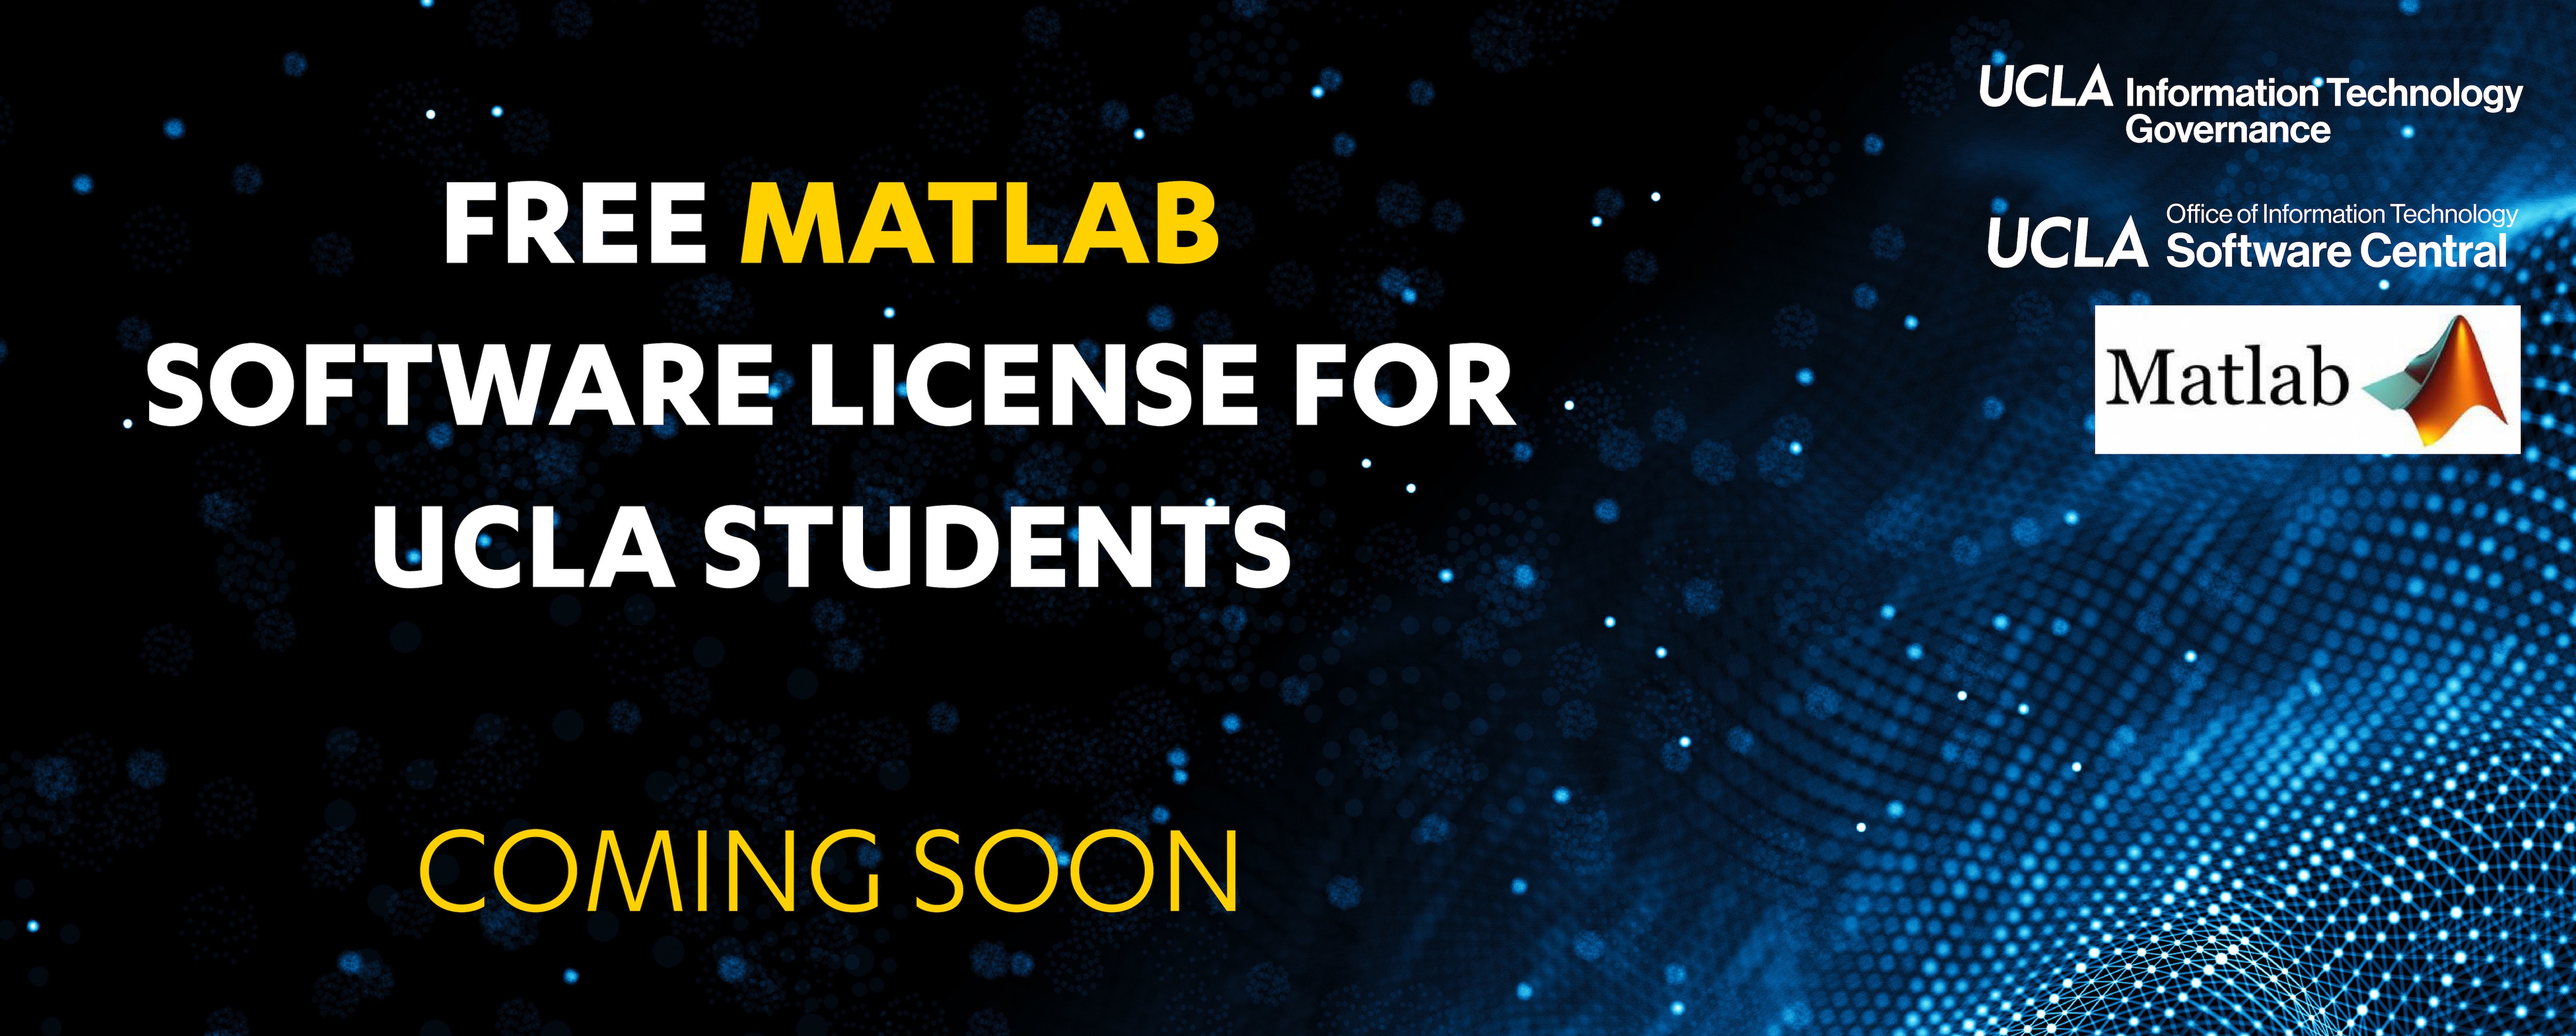 license file of matlab R2009a